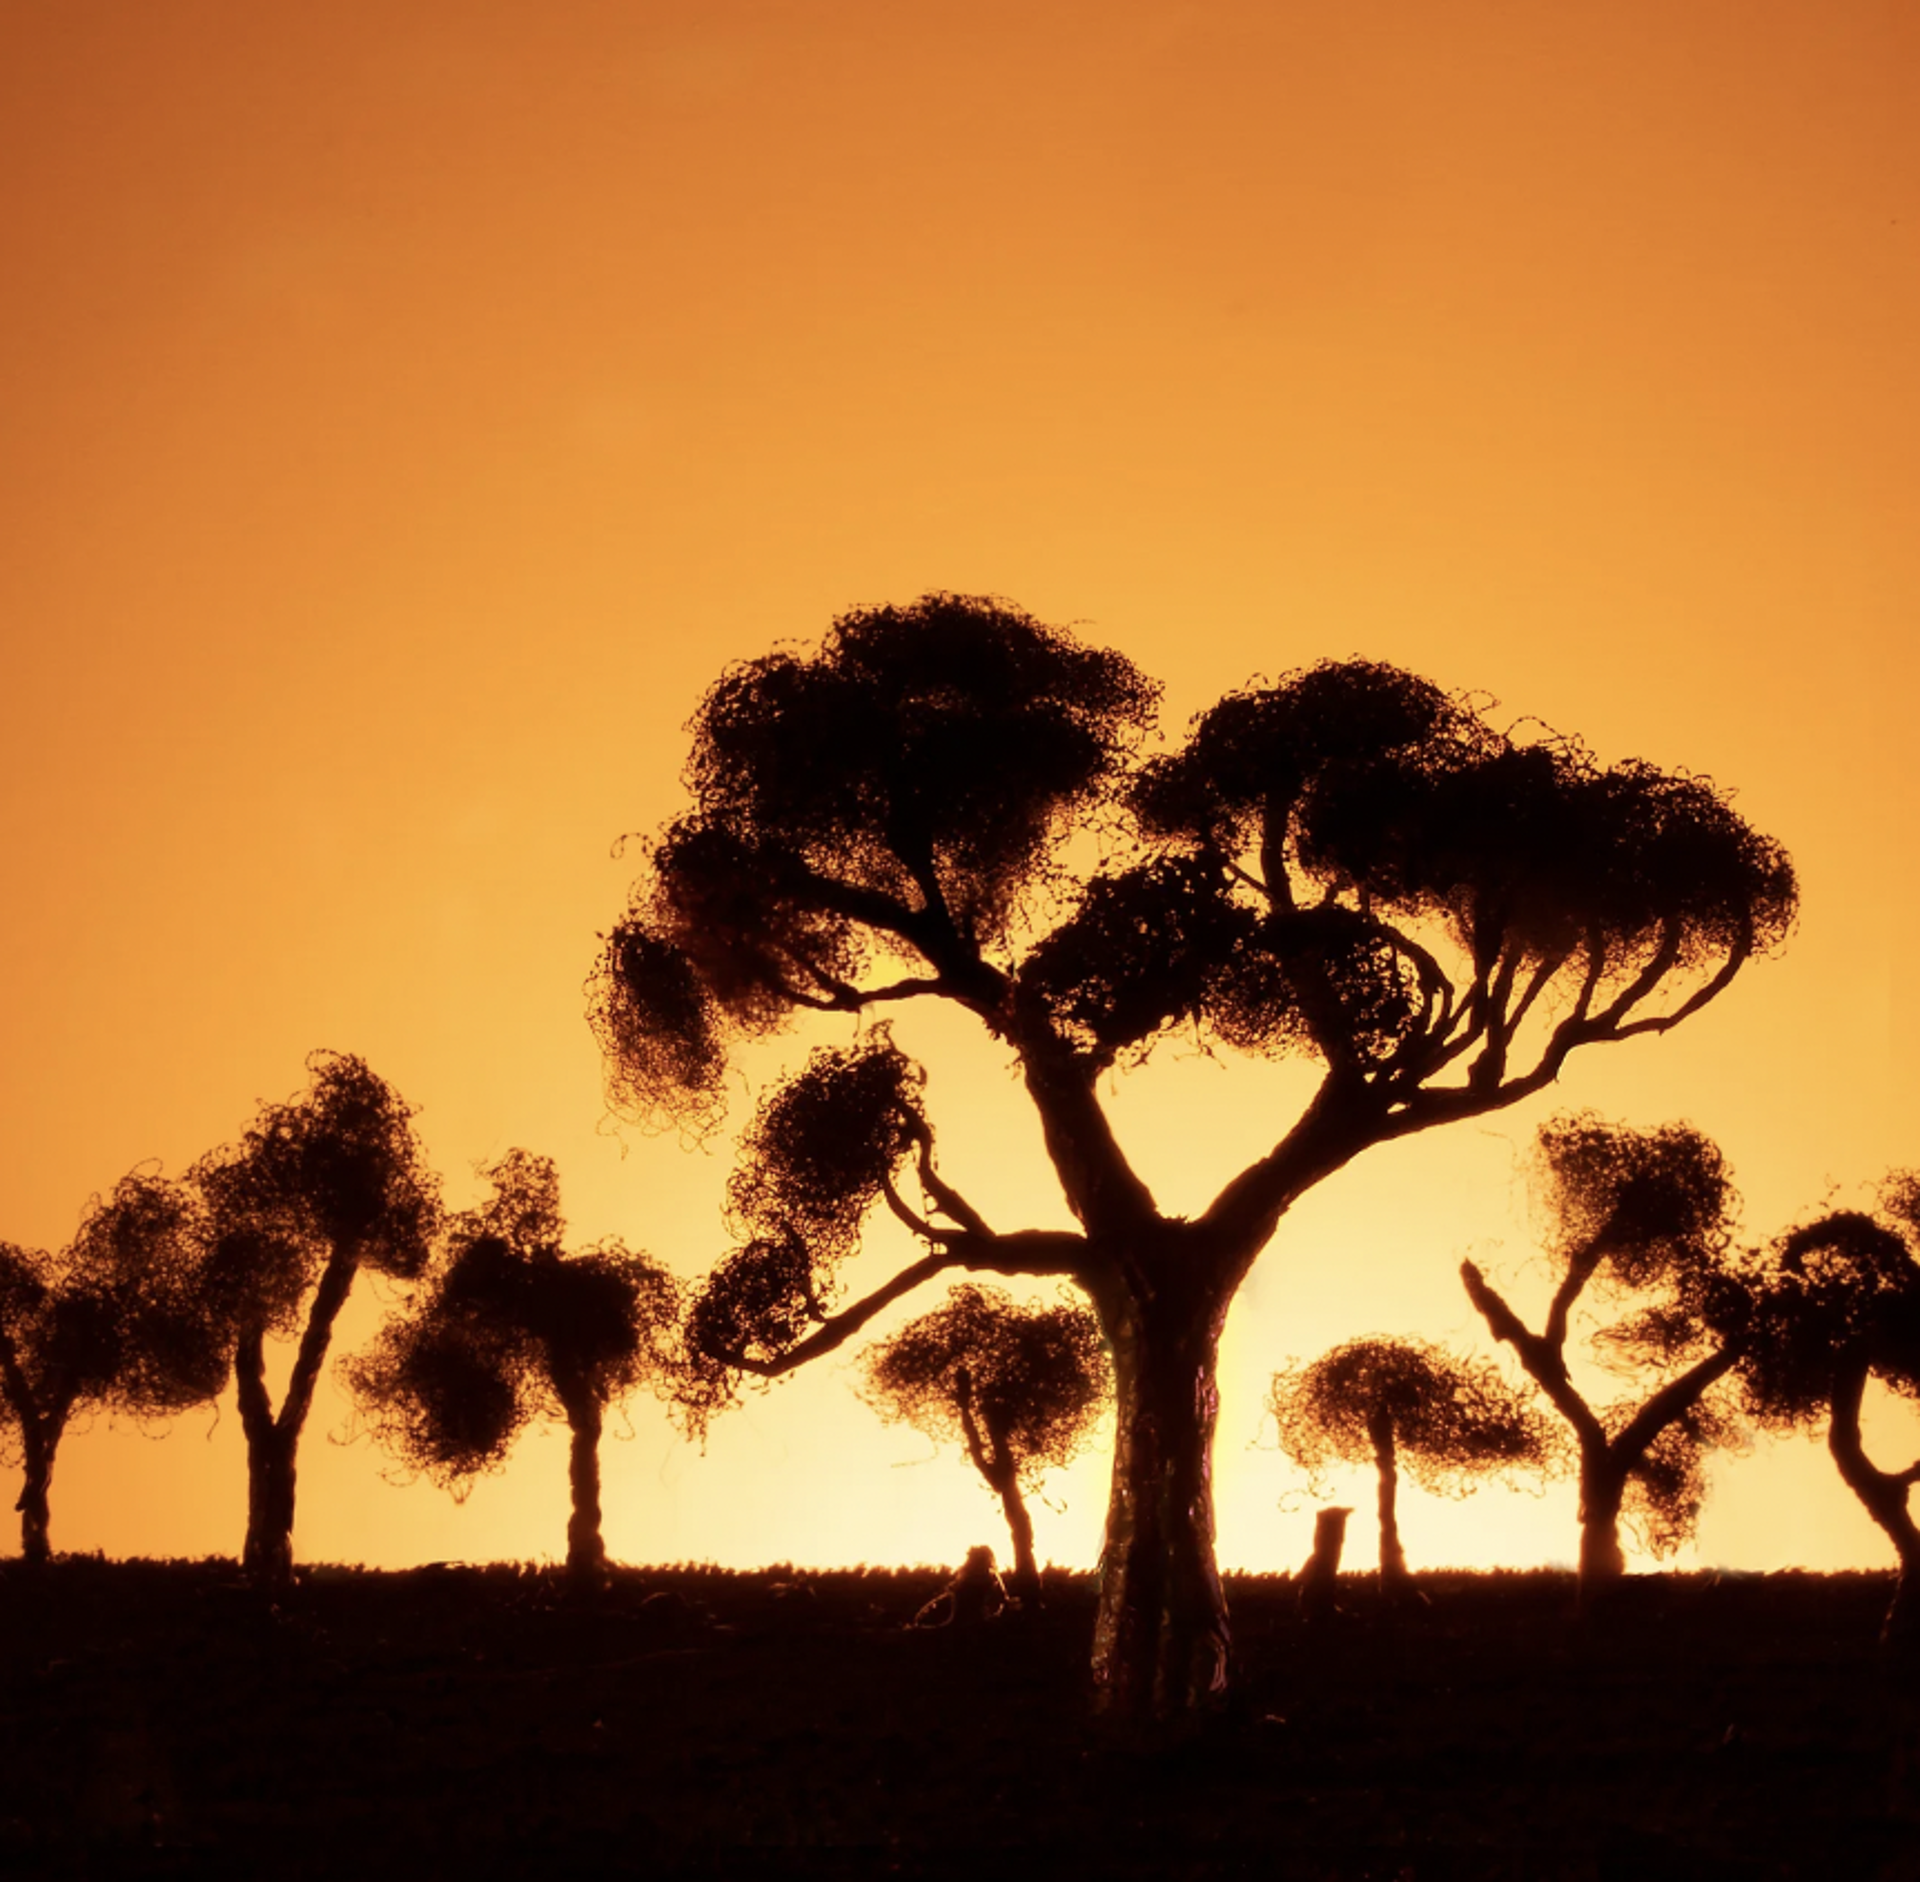 Tree Silhouettes by Stephen Dorsett